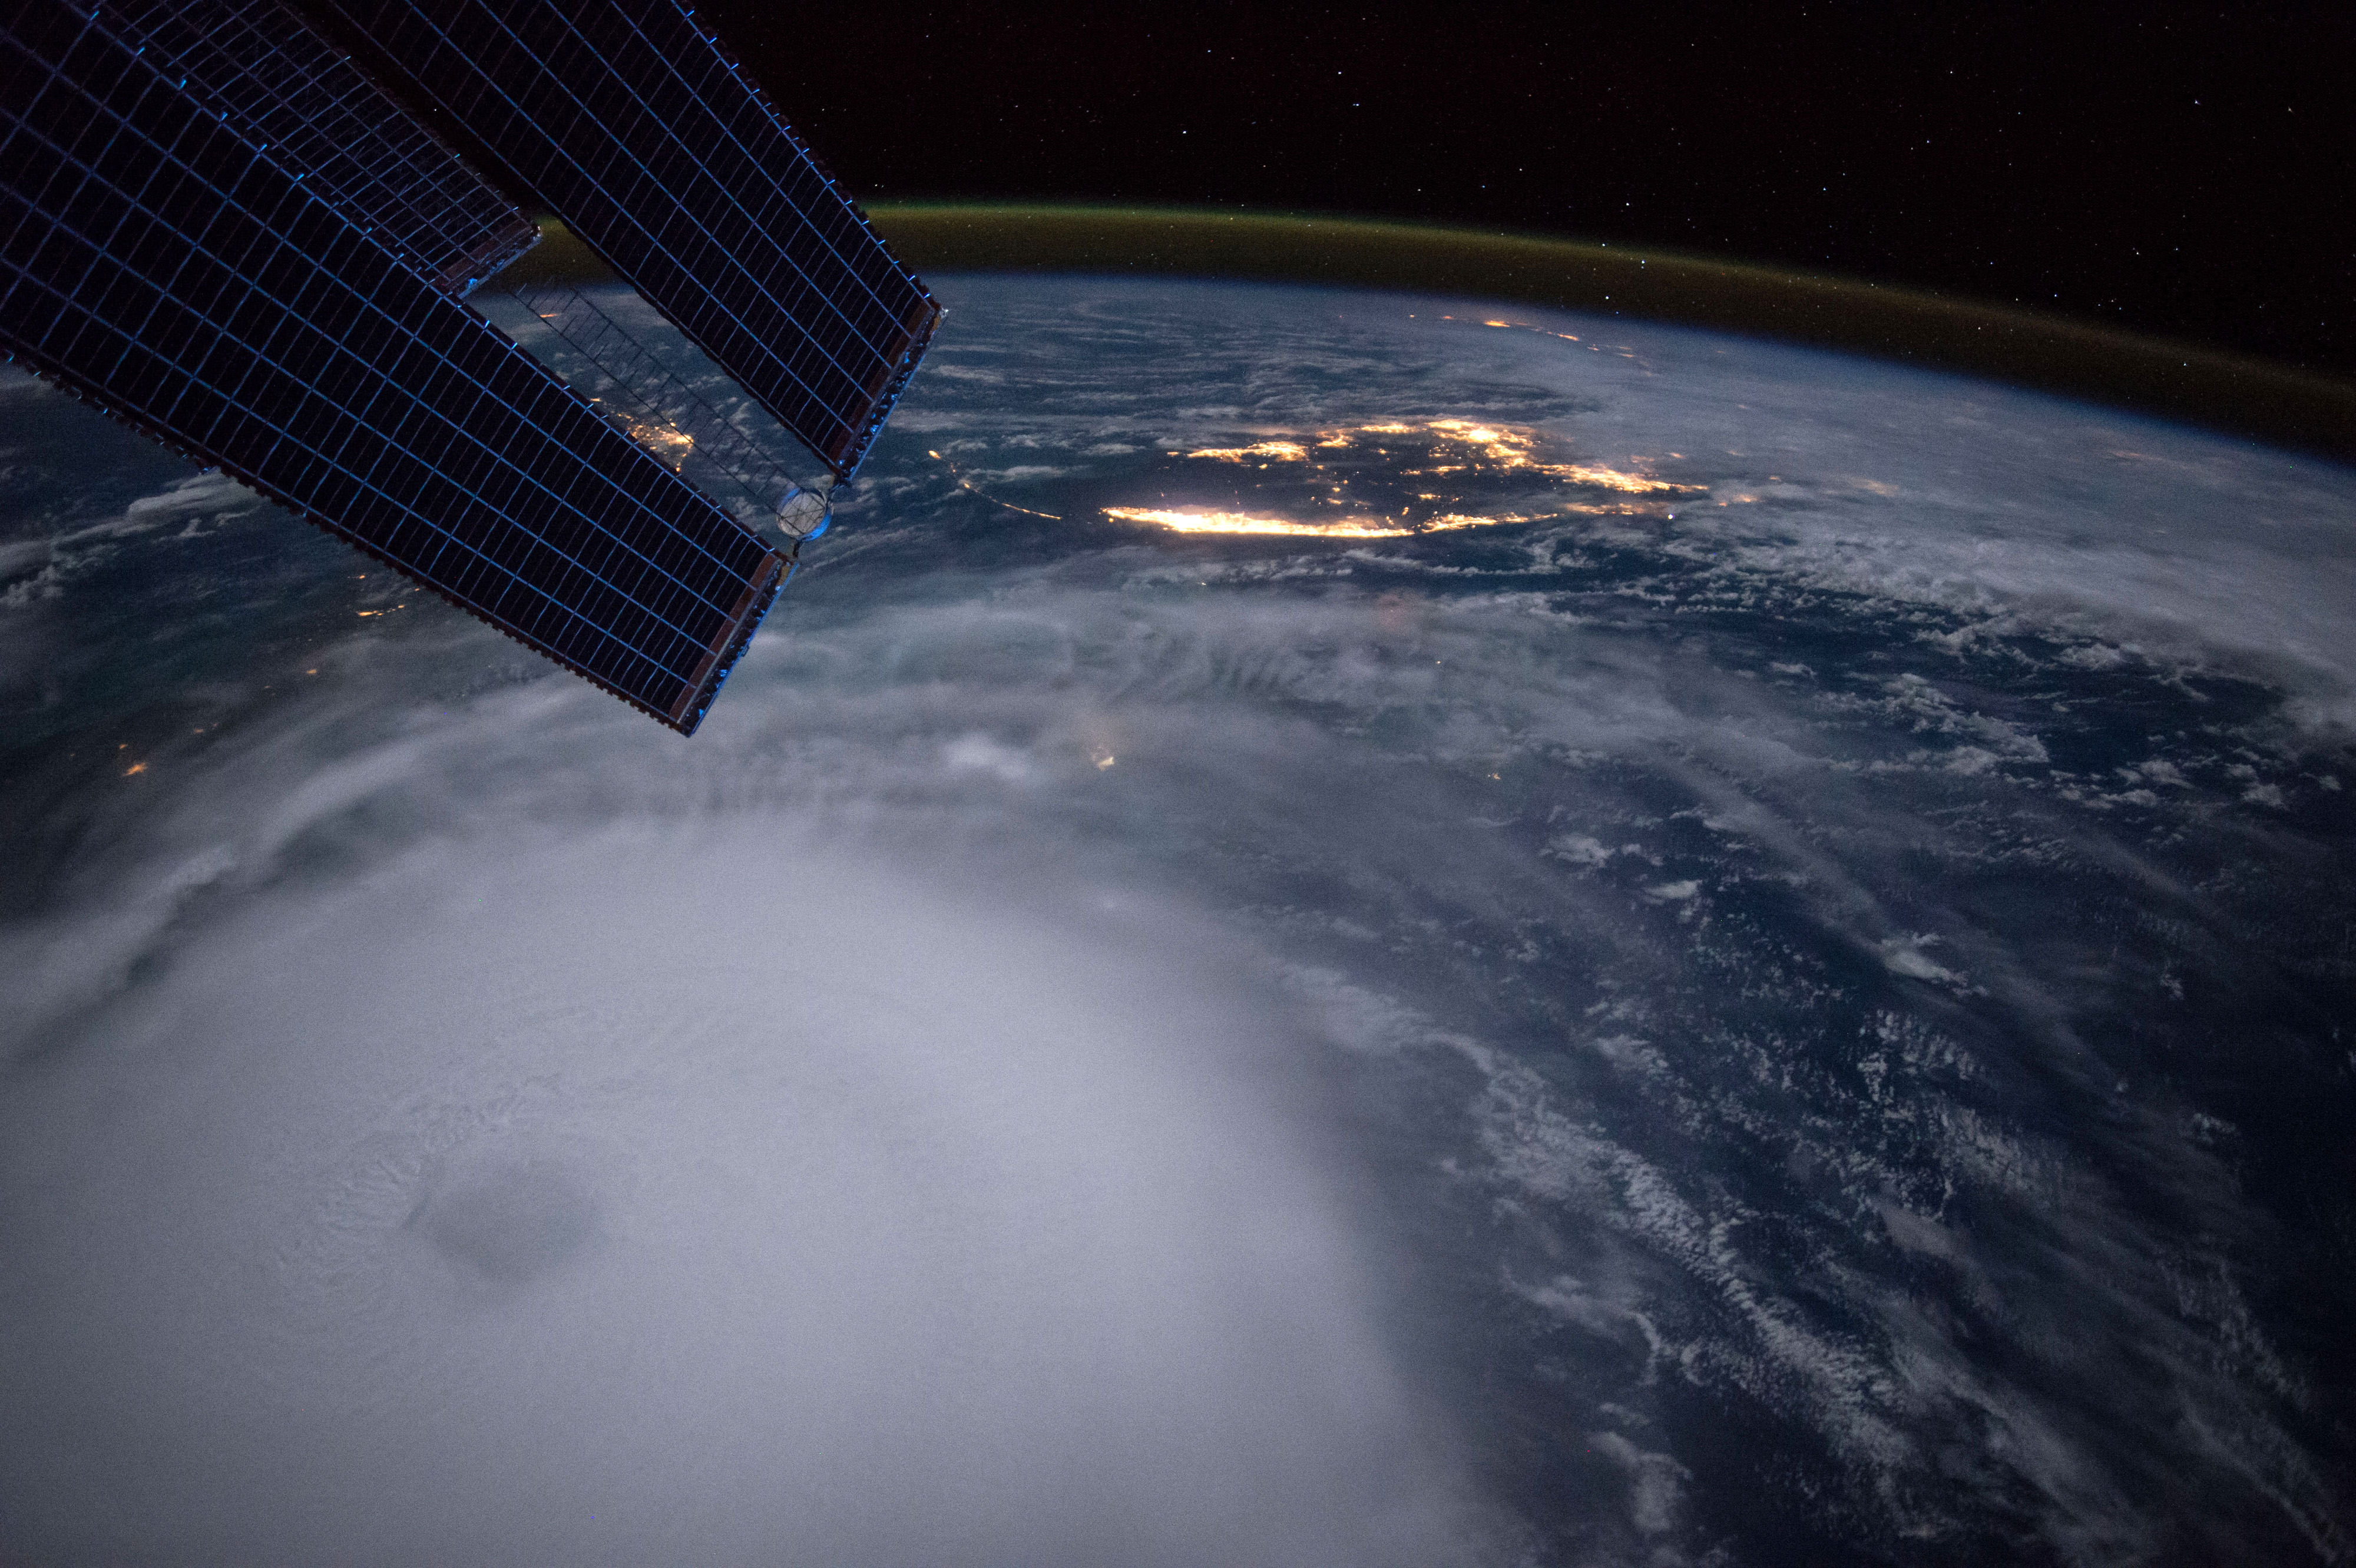 Hurricane Joaquin captured on Oct. 2, 2015 by NASA Astronaut Scott Kelly from the International Space Station. Credit: NASA/Scott Kelly 